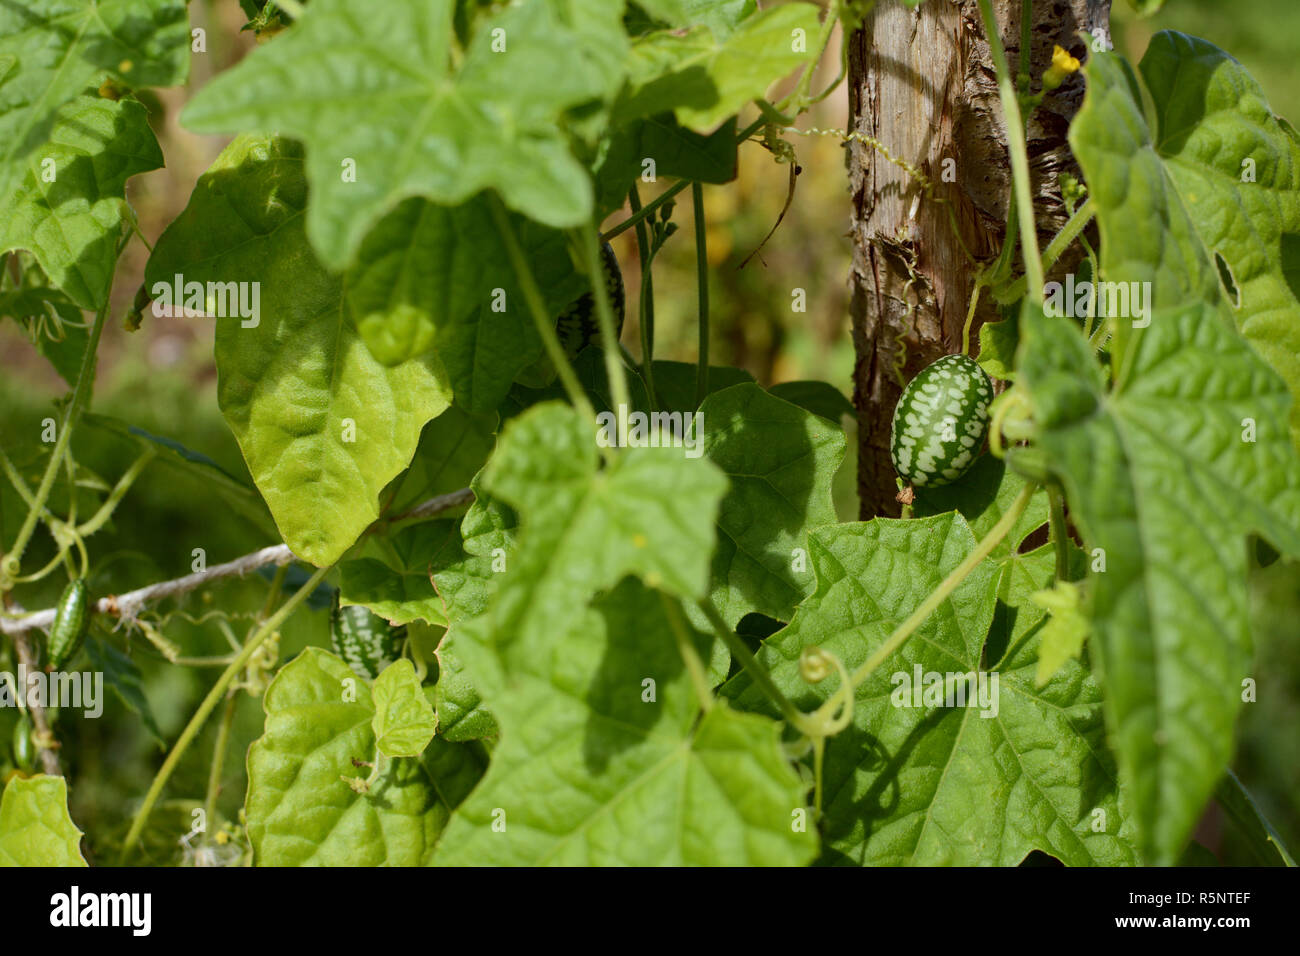 Green cucamelon among foliage Stock Photo